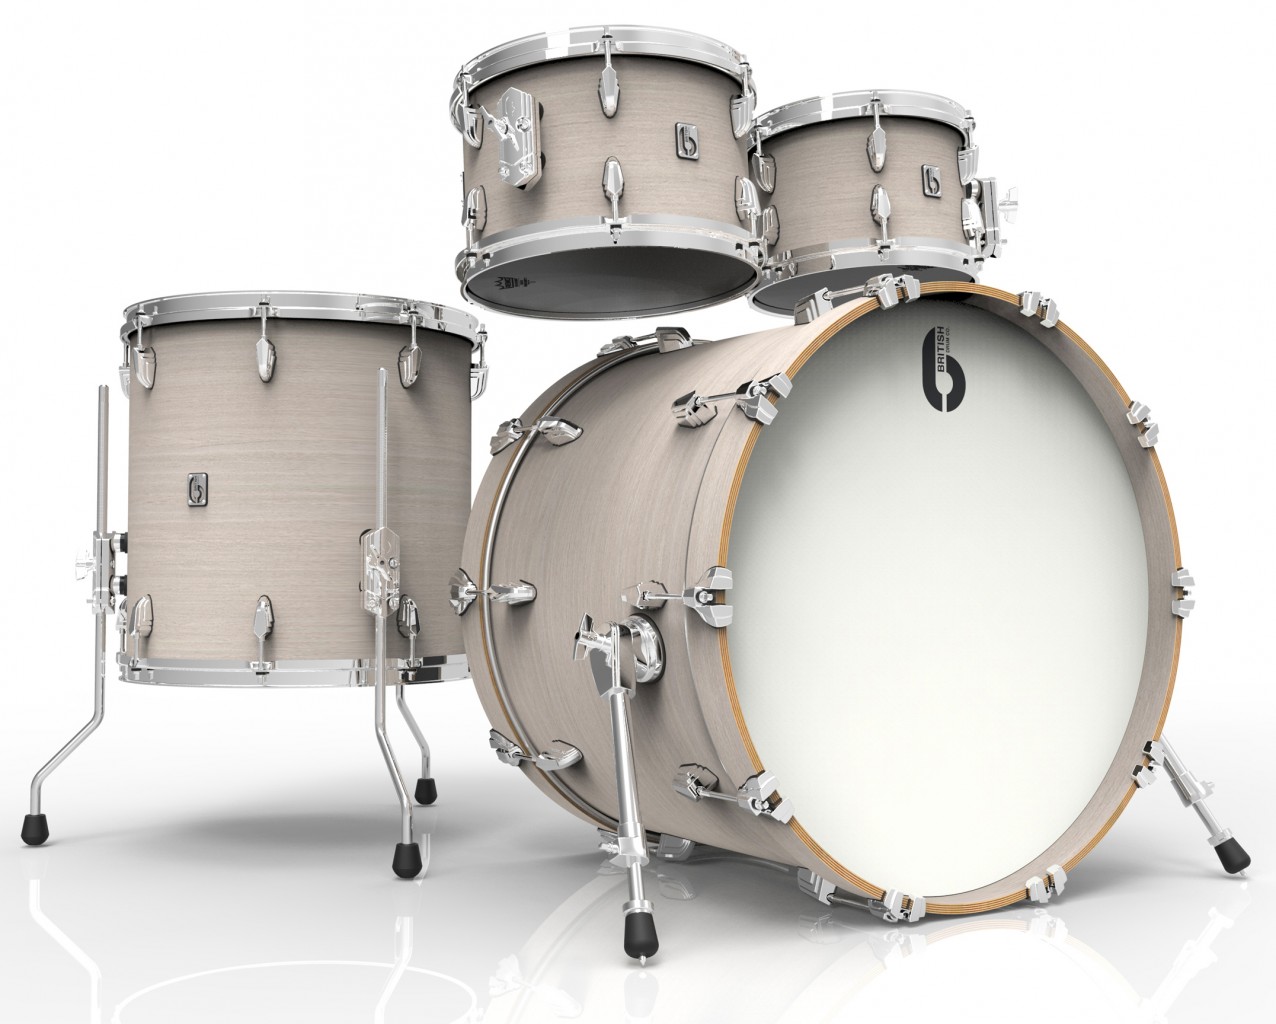 Legend Fusion 22 4-piece drum set, cold-pressed birch 6 mm shells, Whitechapel finish